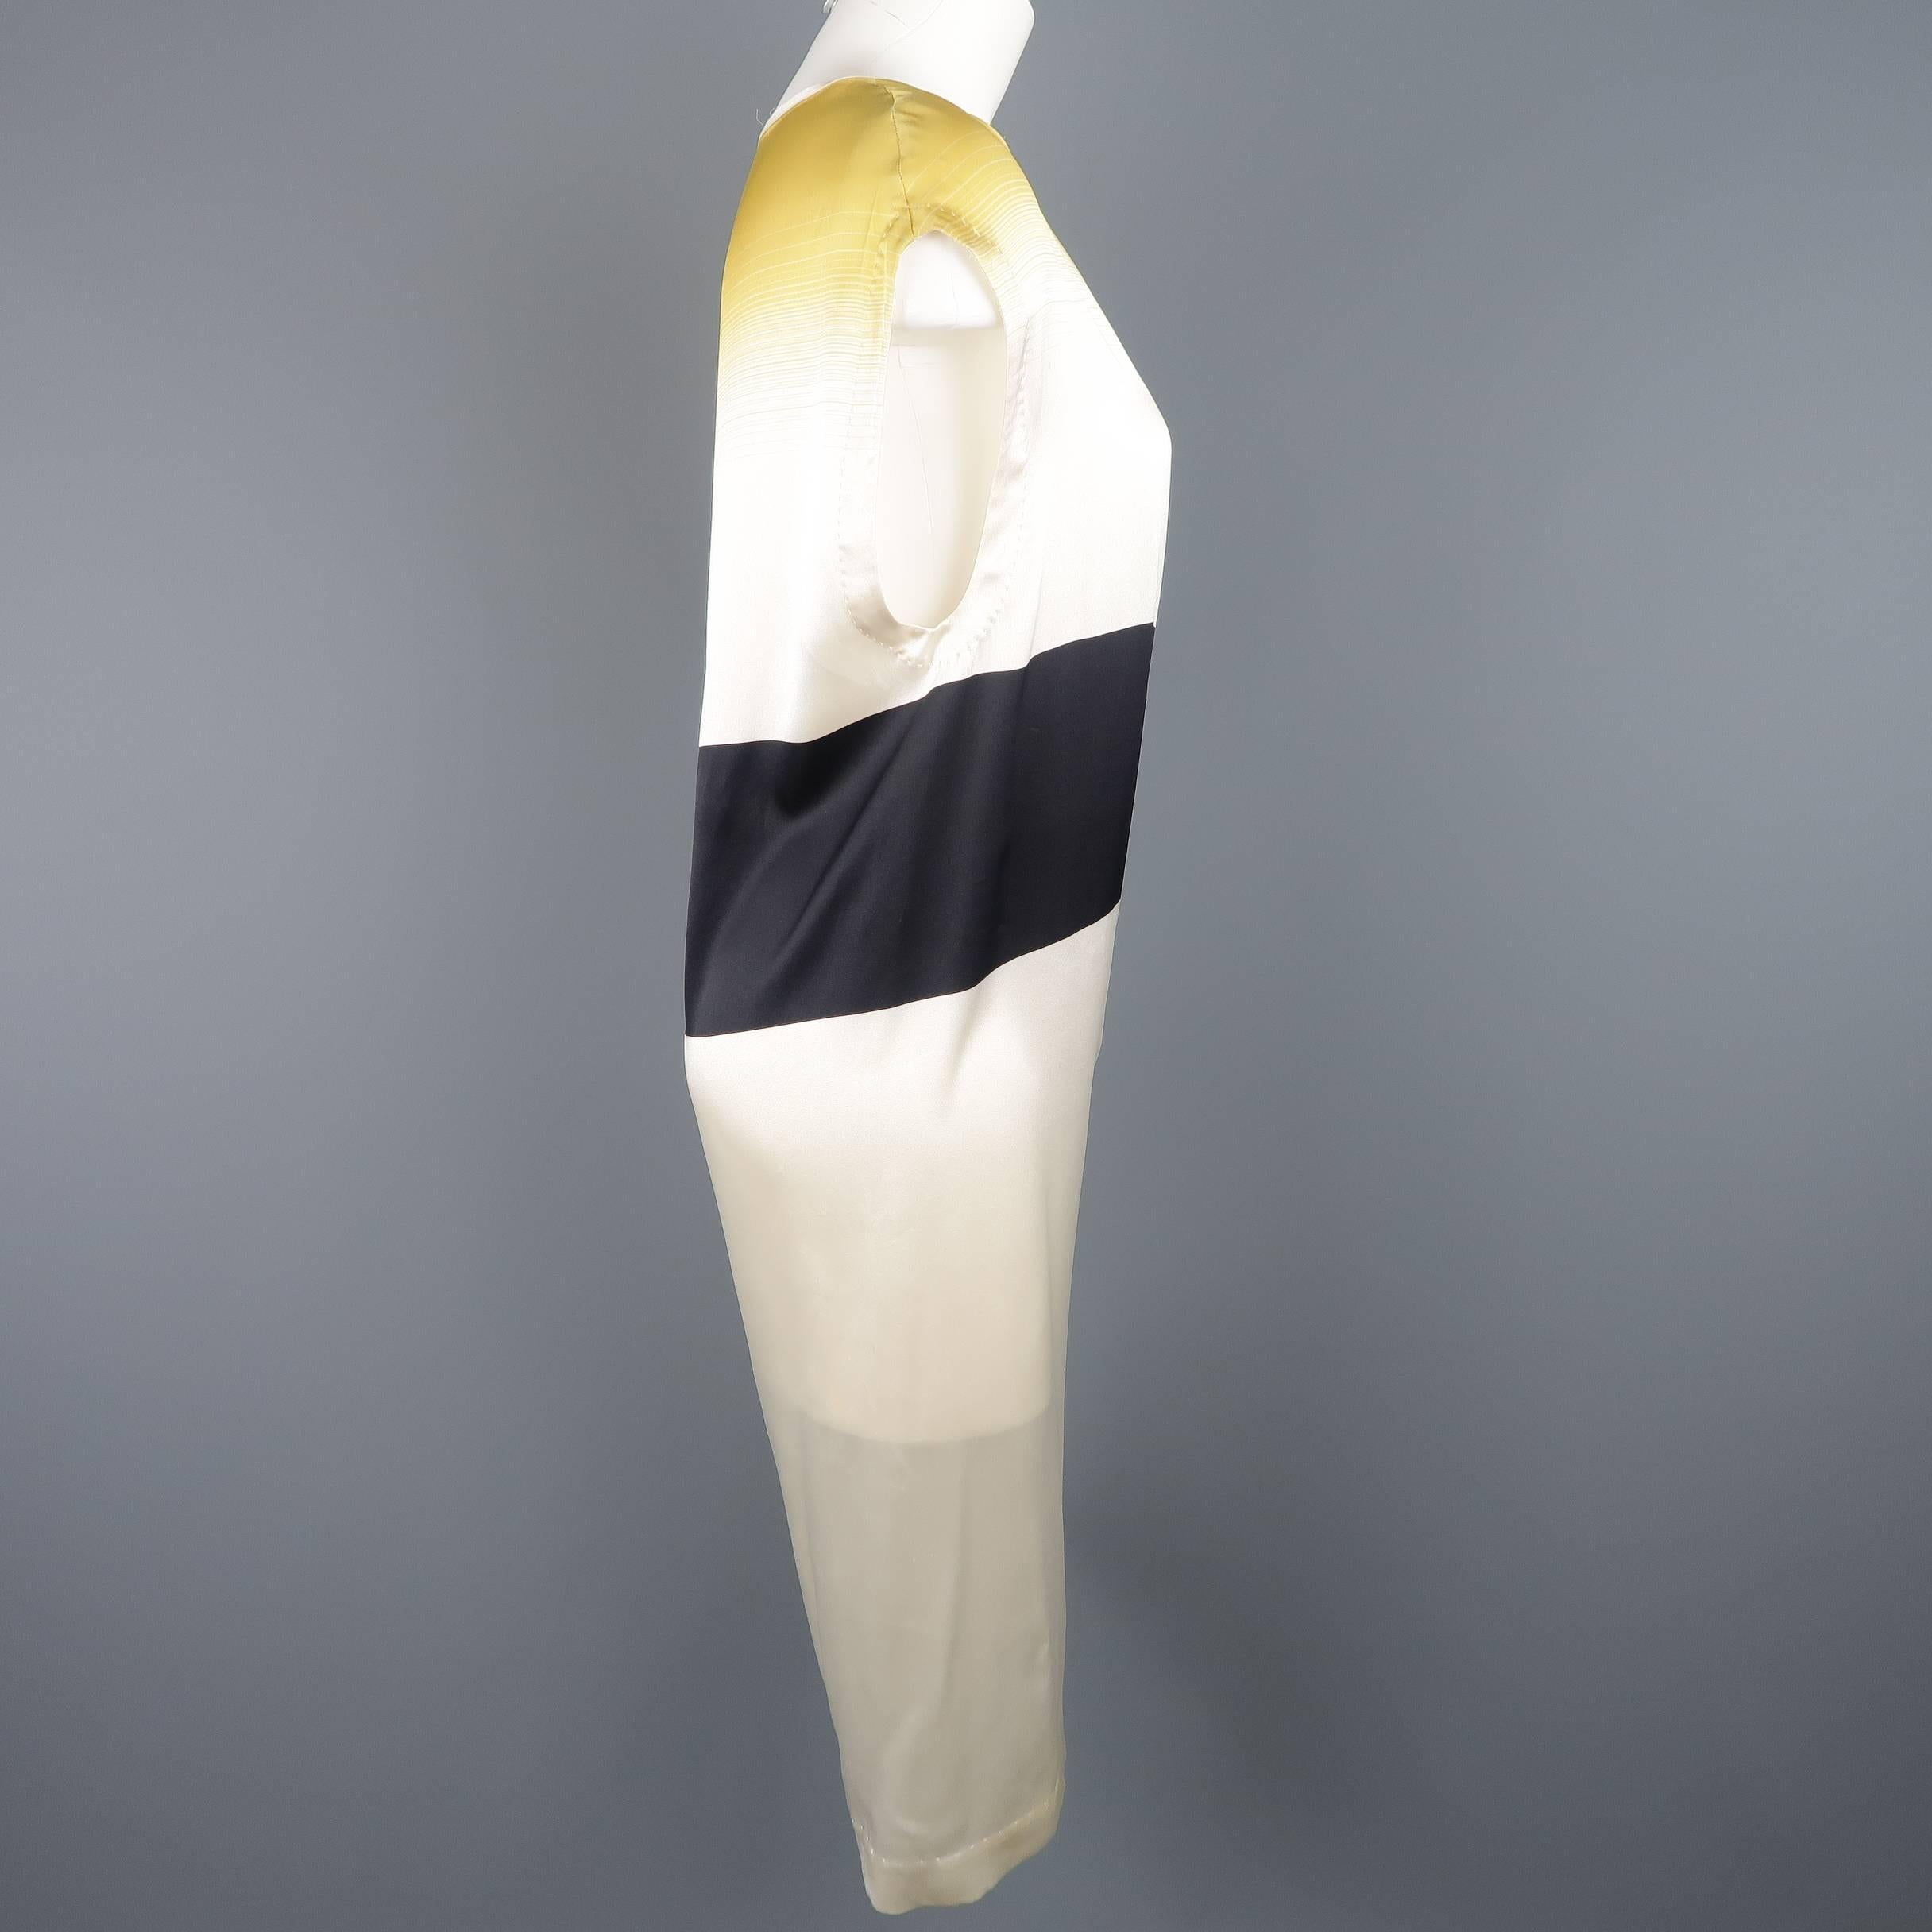 Dries Van Noten Dress - Spring 2009 Runway - Cream Yellow Black Silk Pleated 1